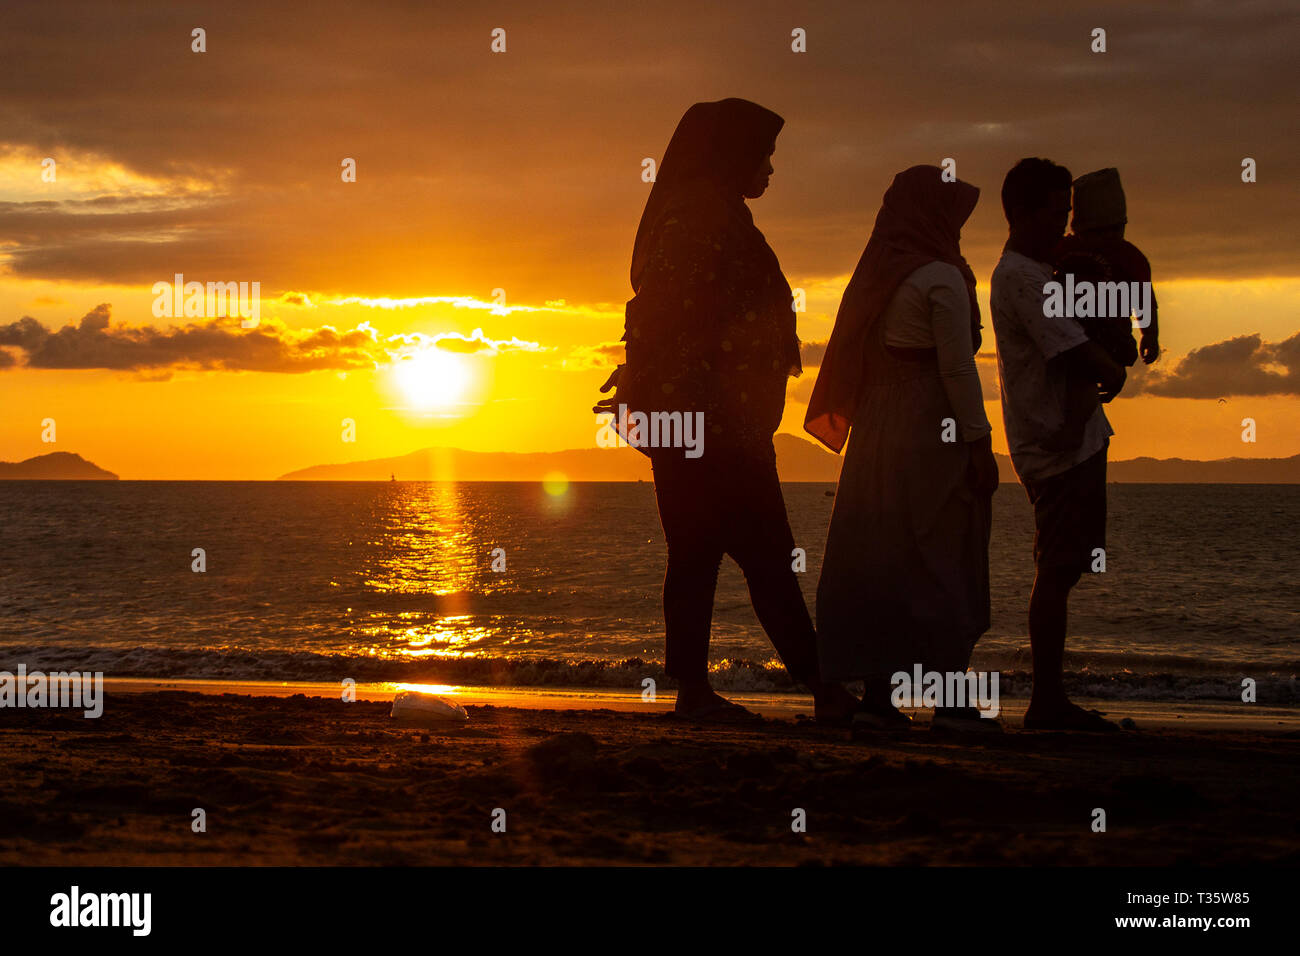 Residents seen enjoying the sunset on the Gampong Jawa beach, Banda Aceh, Indonesia. Stock Photo